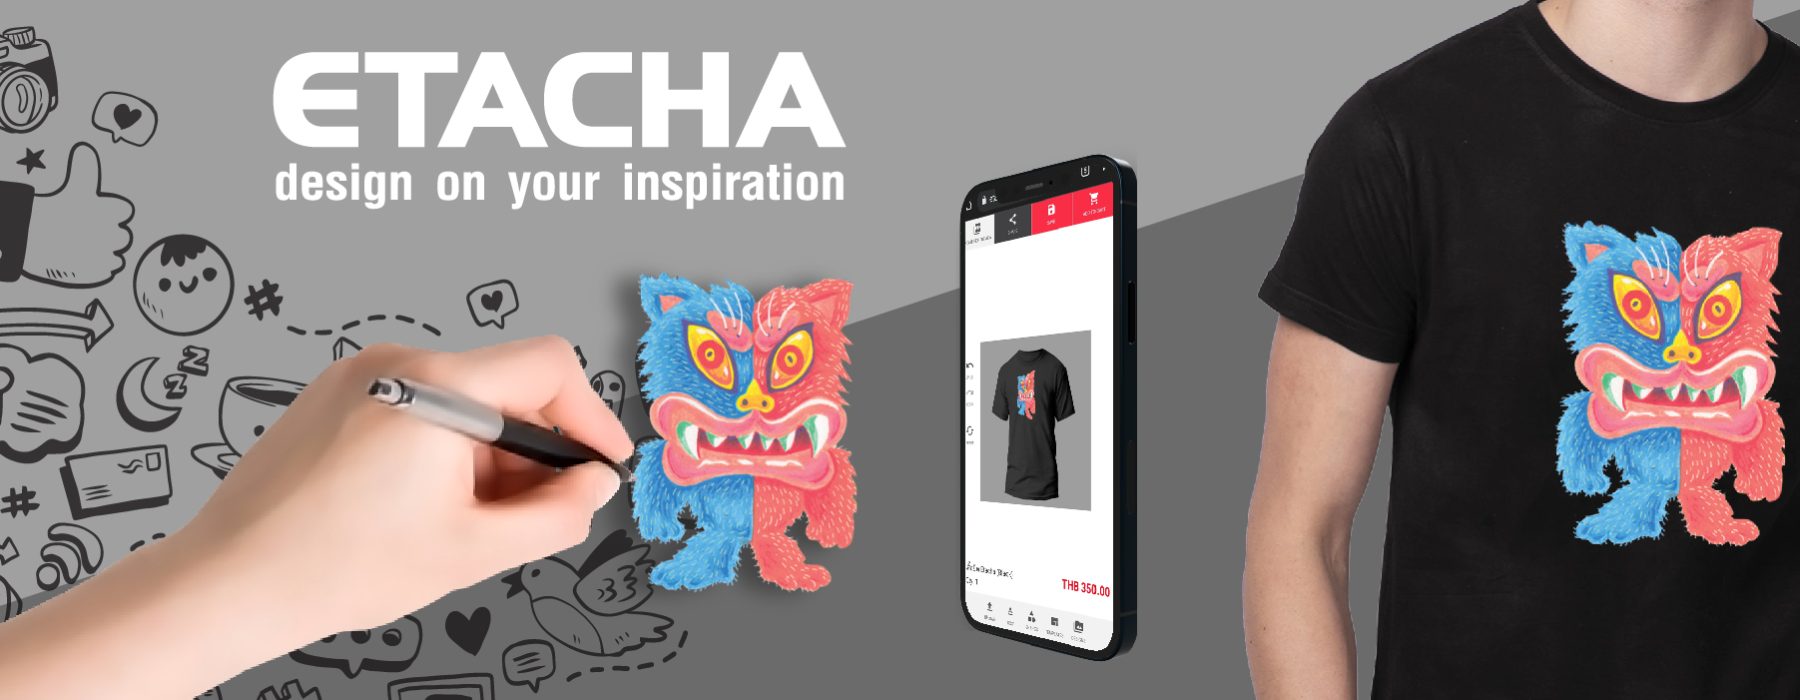 etacha web banner custom-05